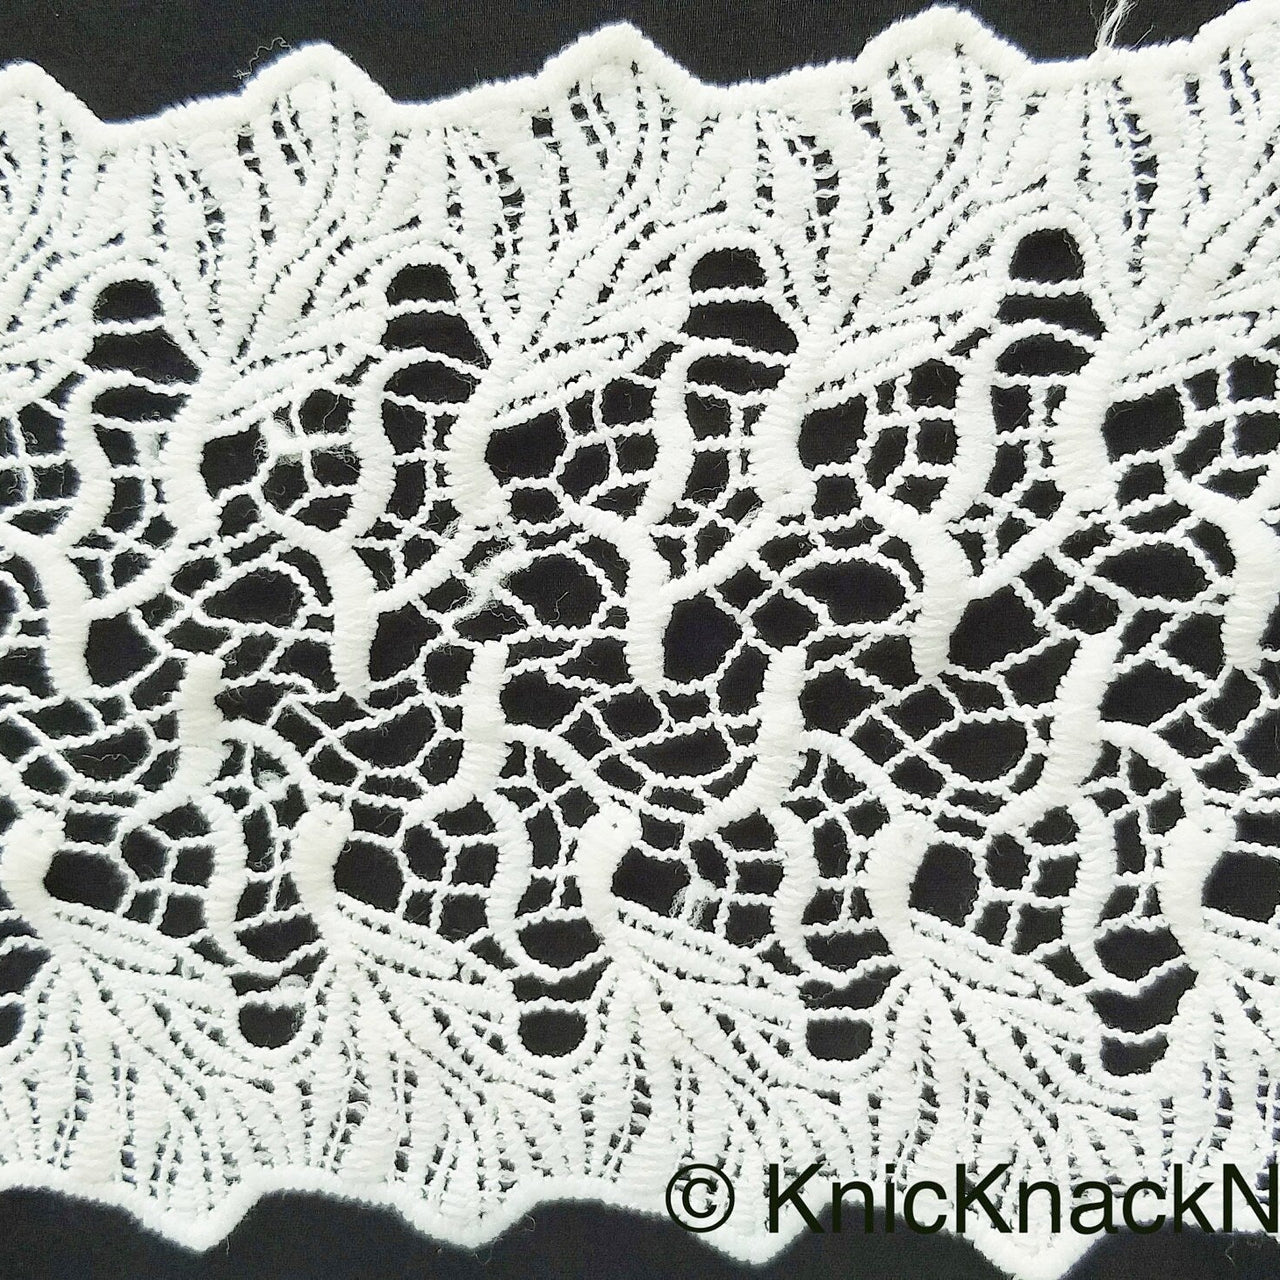 Off White Trim, Embroidered Cotton Lace Trim, Crochet Lace